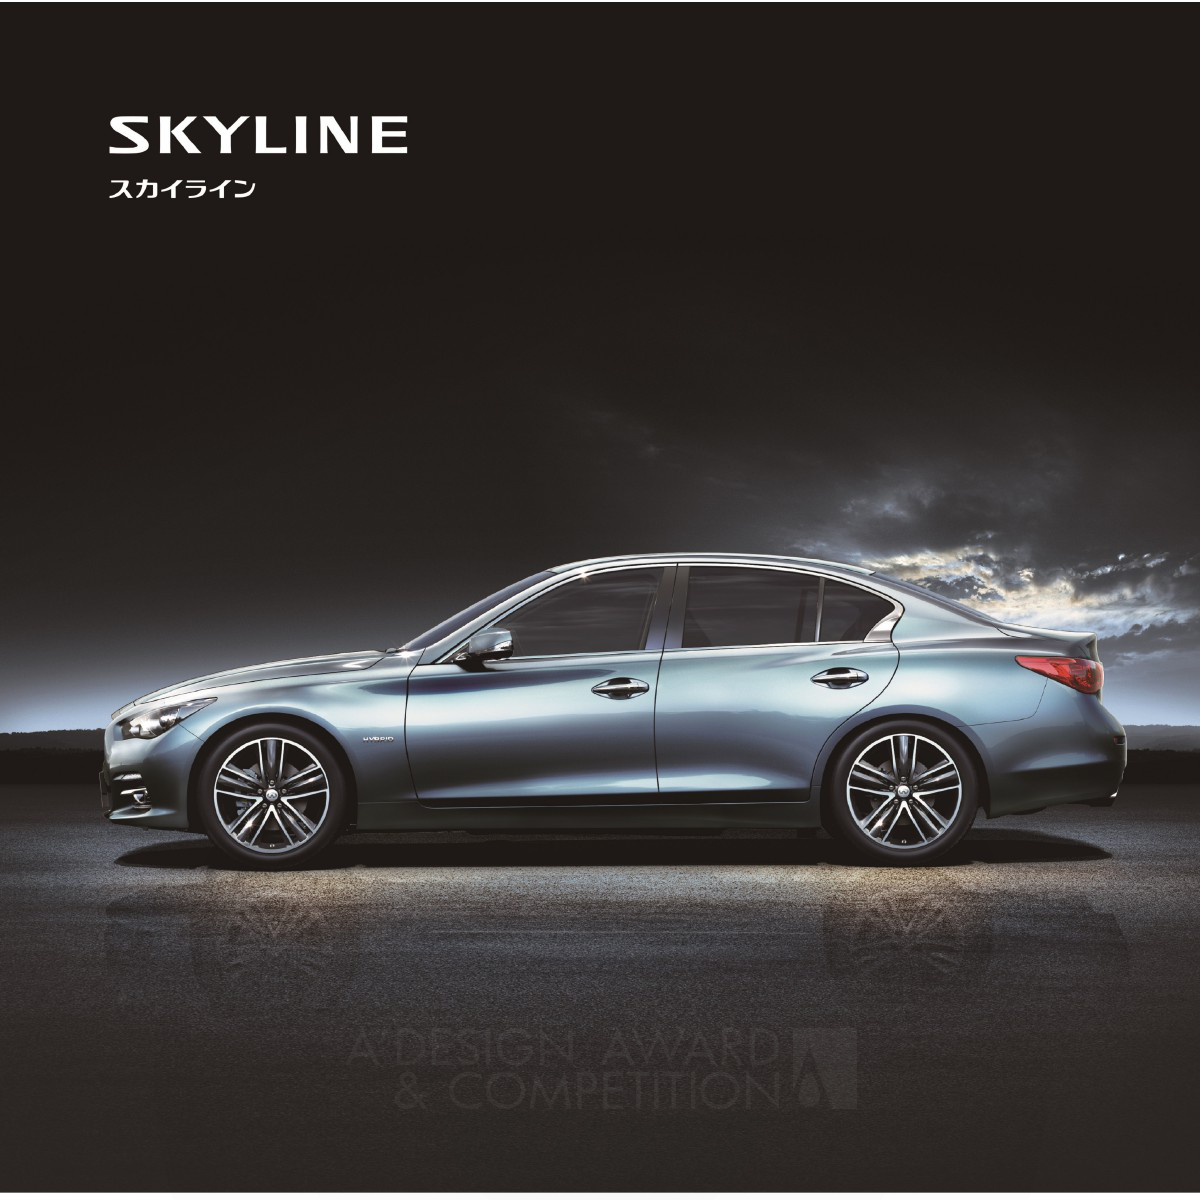 Nissan skyline Brochure by E-graphics communications